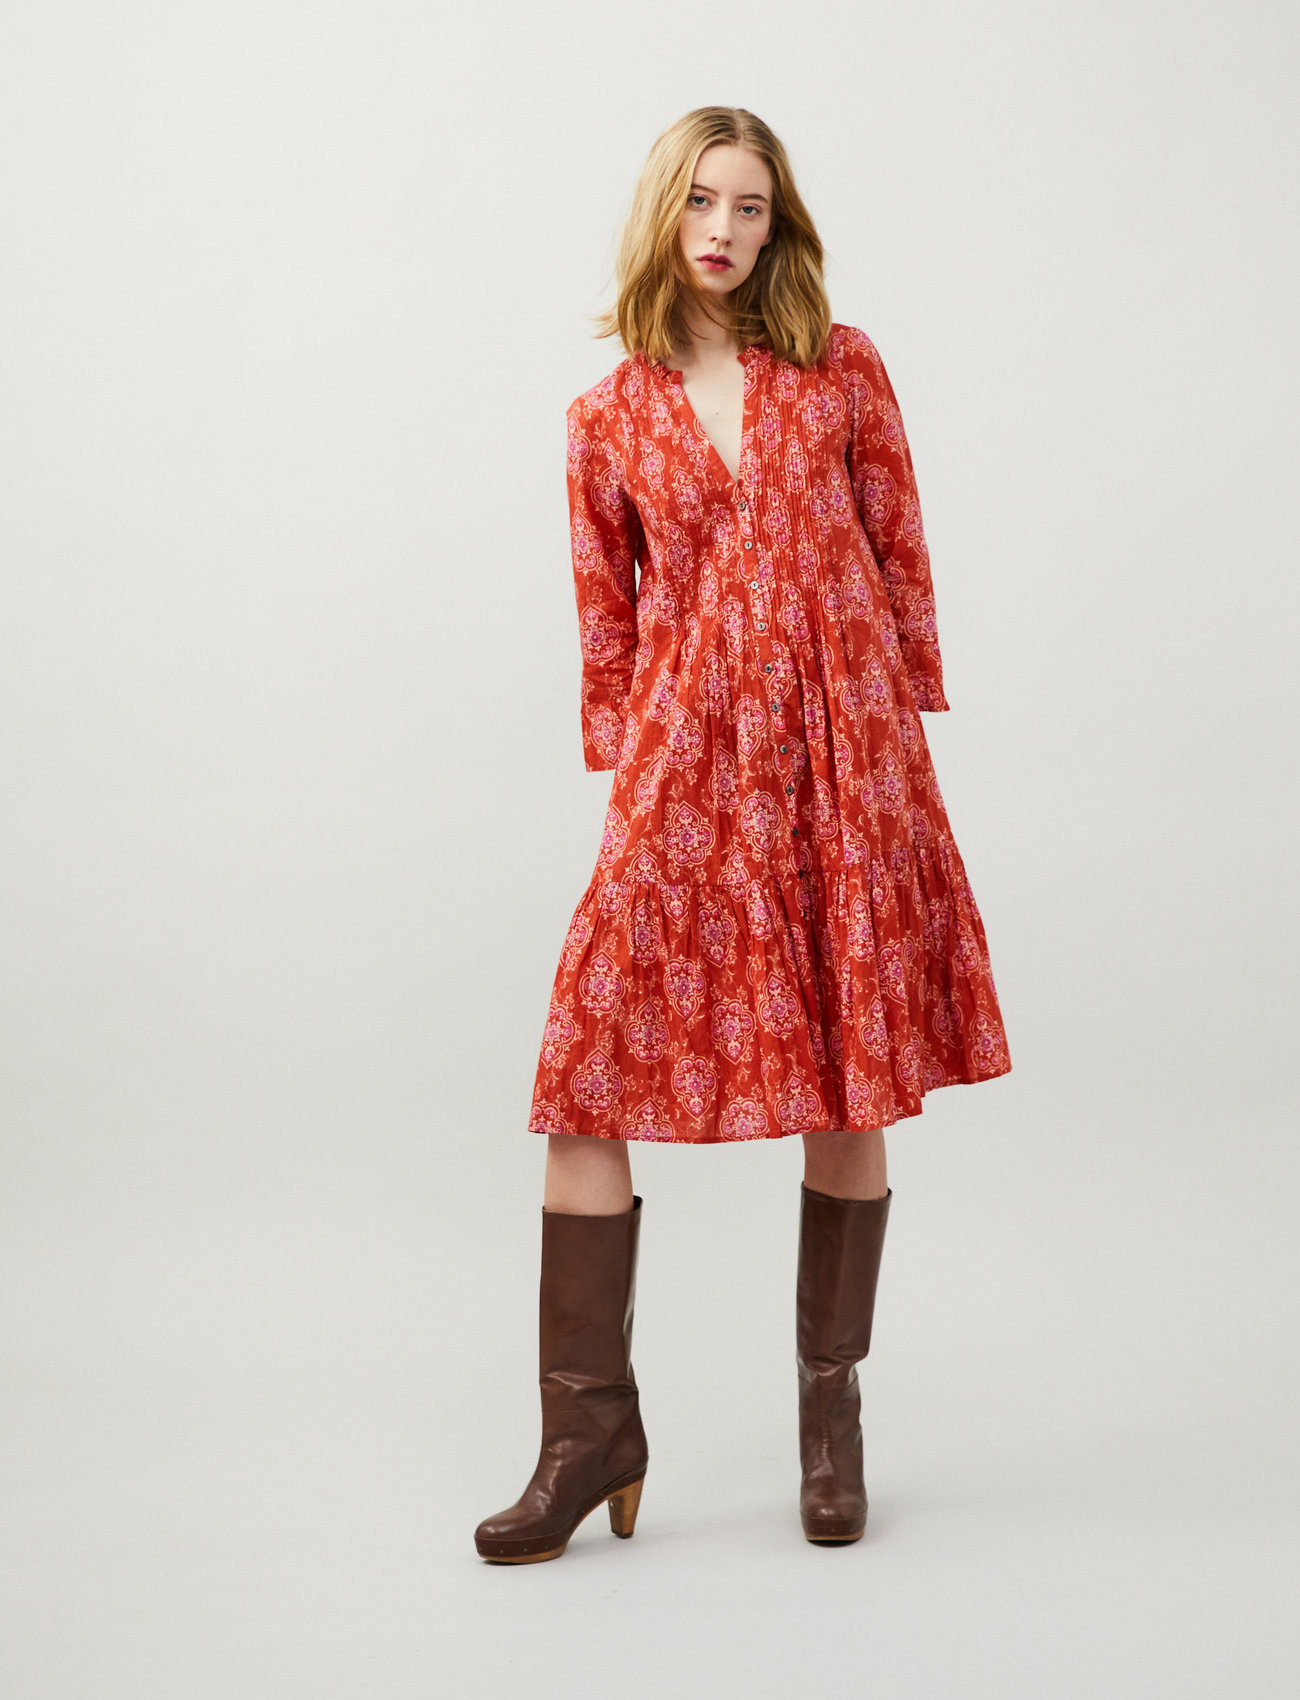 ODD MOLLY - Tessa Dress - shirt dresses - dreamy red - 0